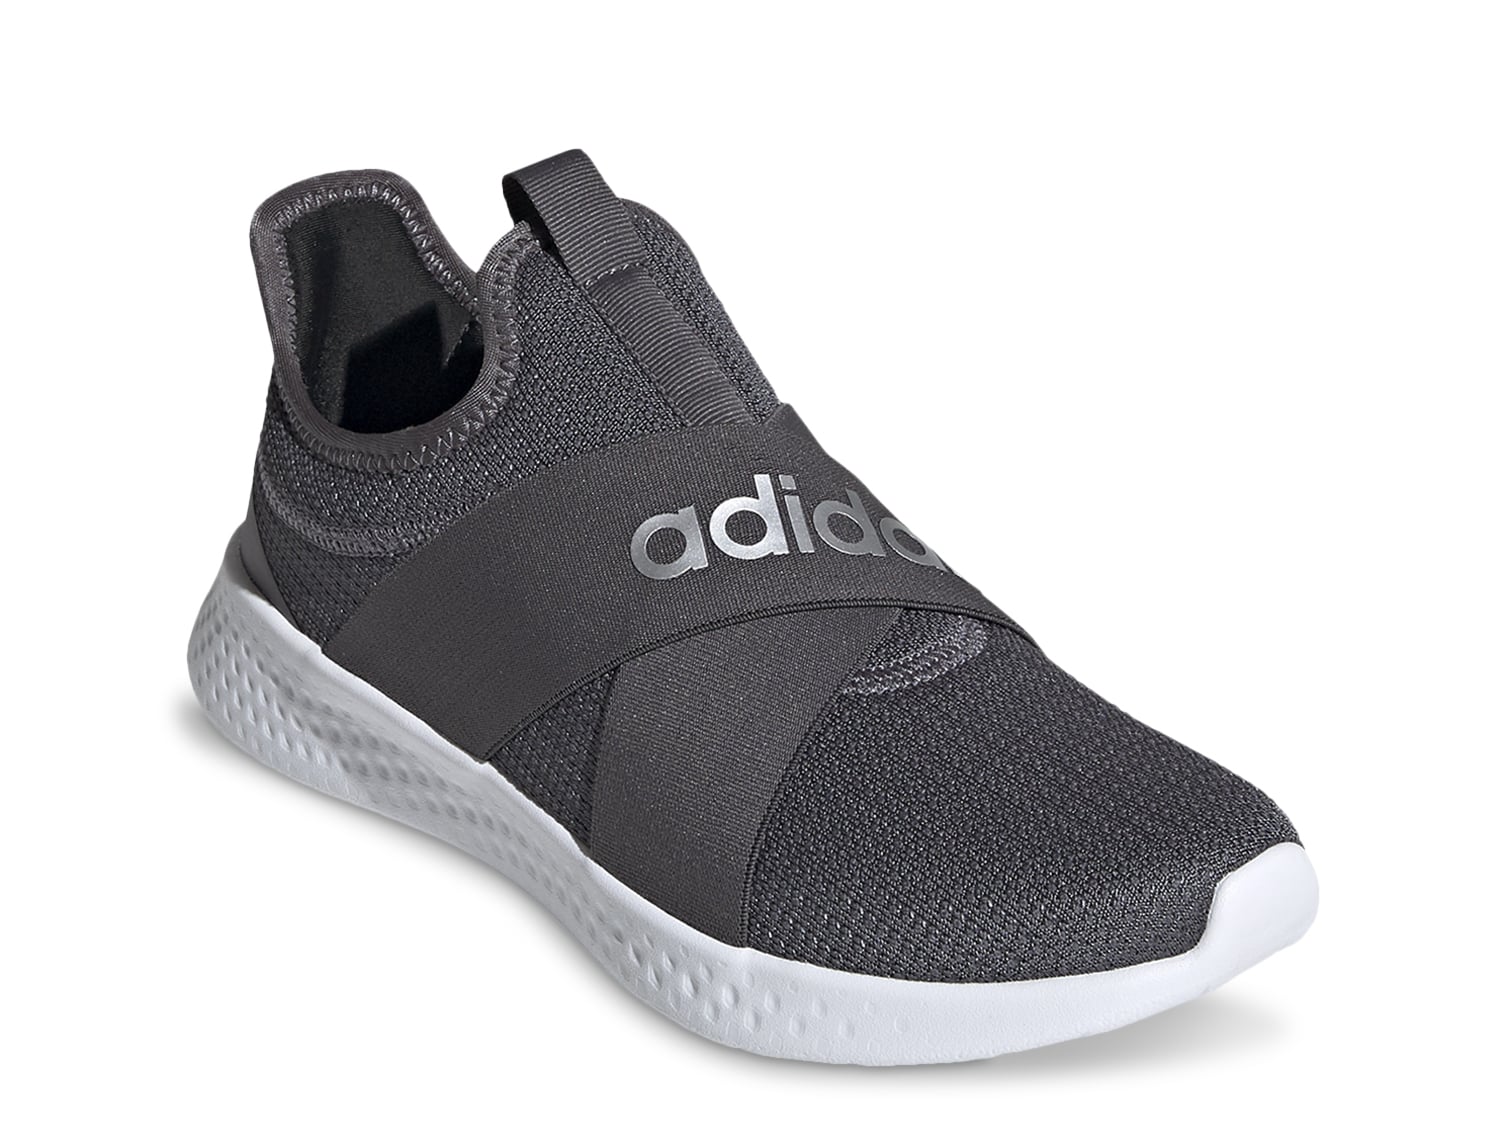 gray womens adidas shoes